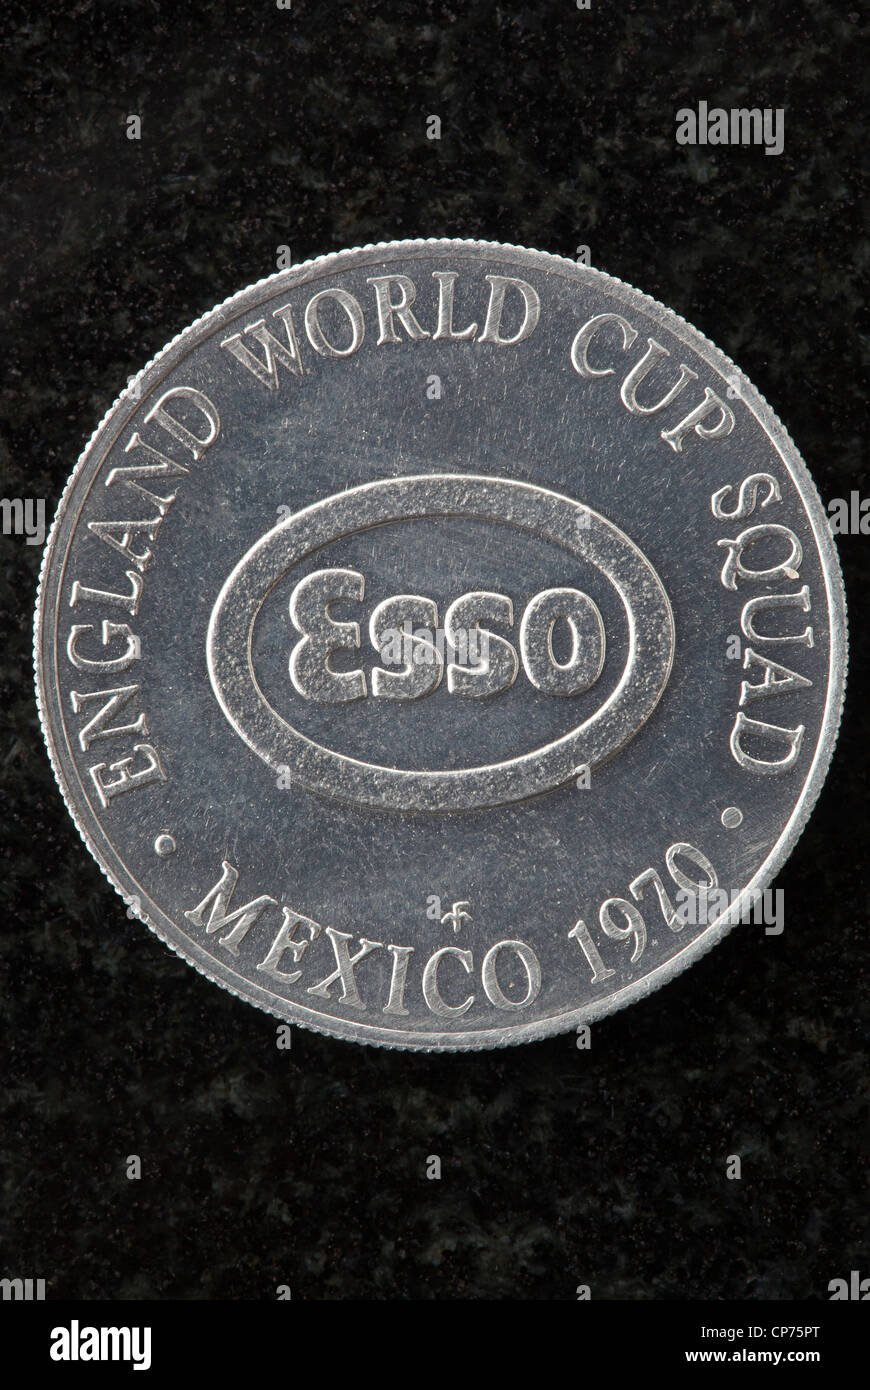 England World Cup Squad Mexico 1979 Esso Collectors Coin Stock Photo